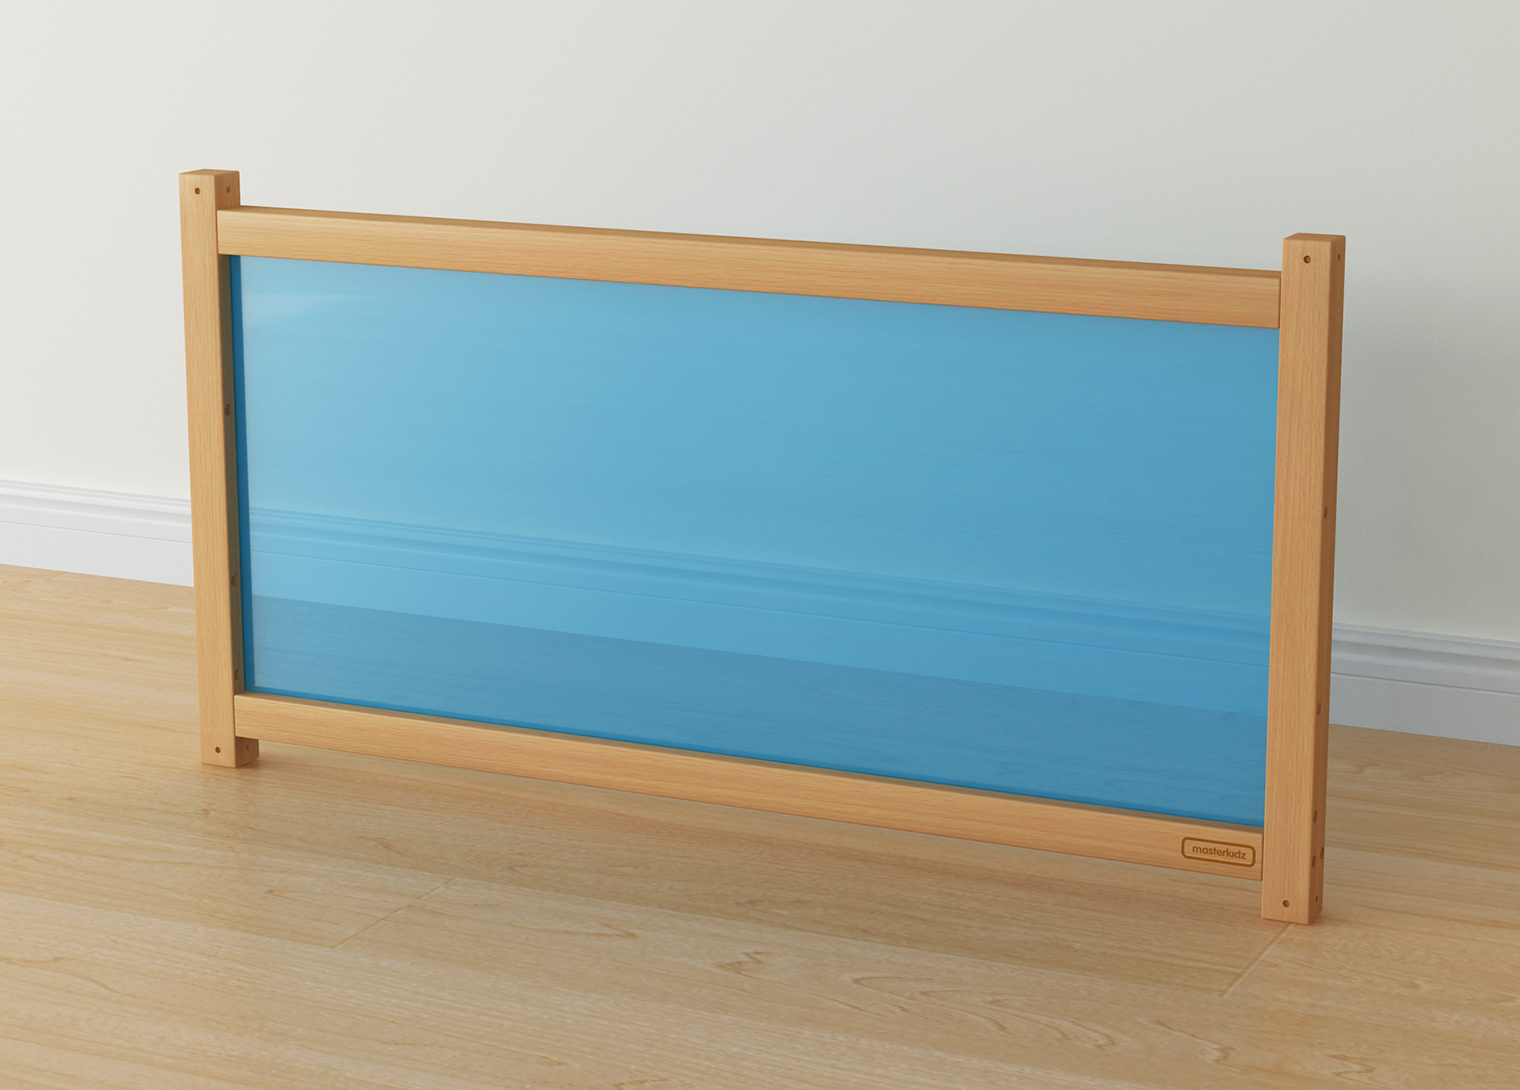 620H x 1200L Divider Panel - Translucent Blue